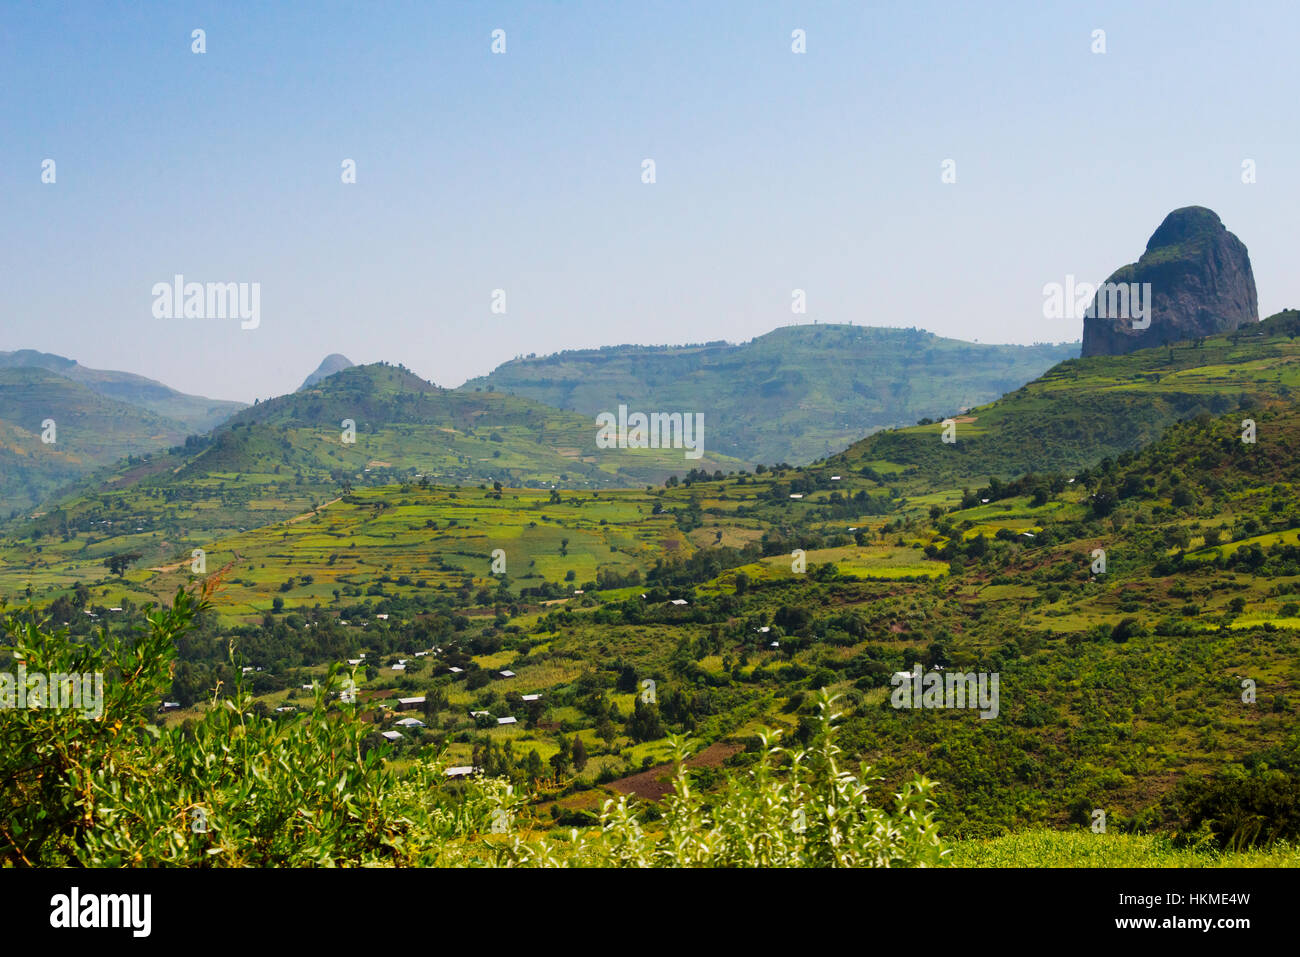 Stone pillar and farmland in the mountain, Bahir Dar, Ethiopia Stock Photo